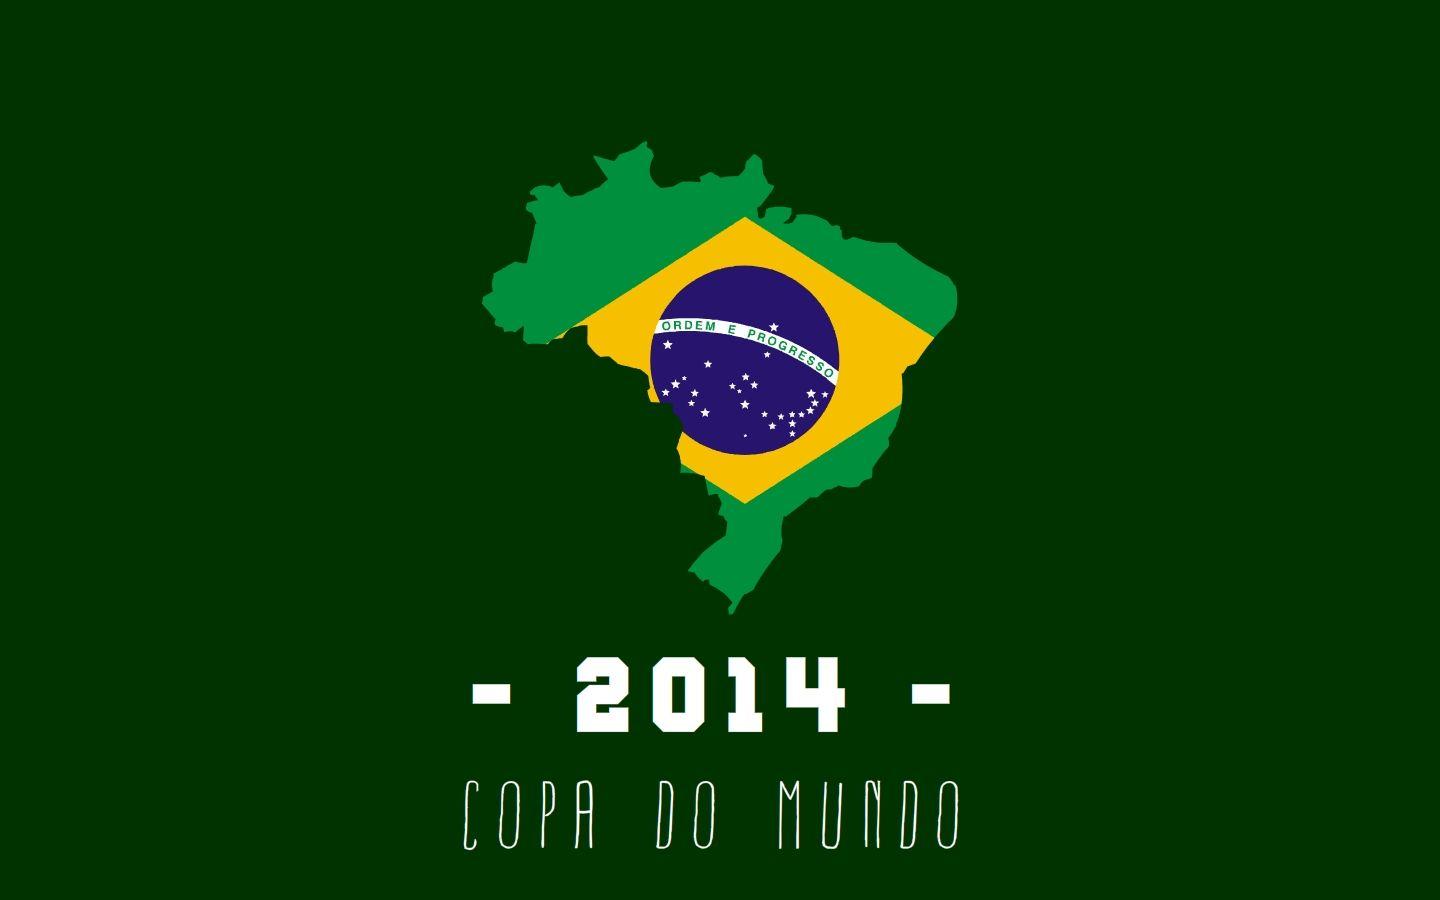 Copa do Mundo Brazil World Cup 2014 Wallpaper have resolution